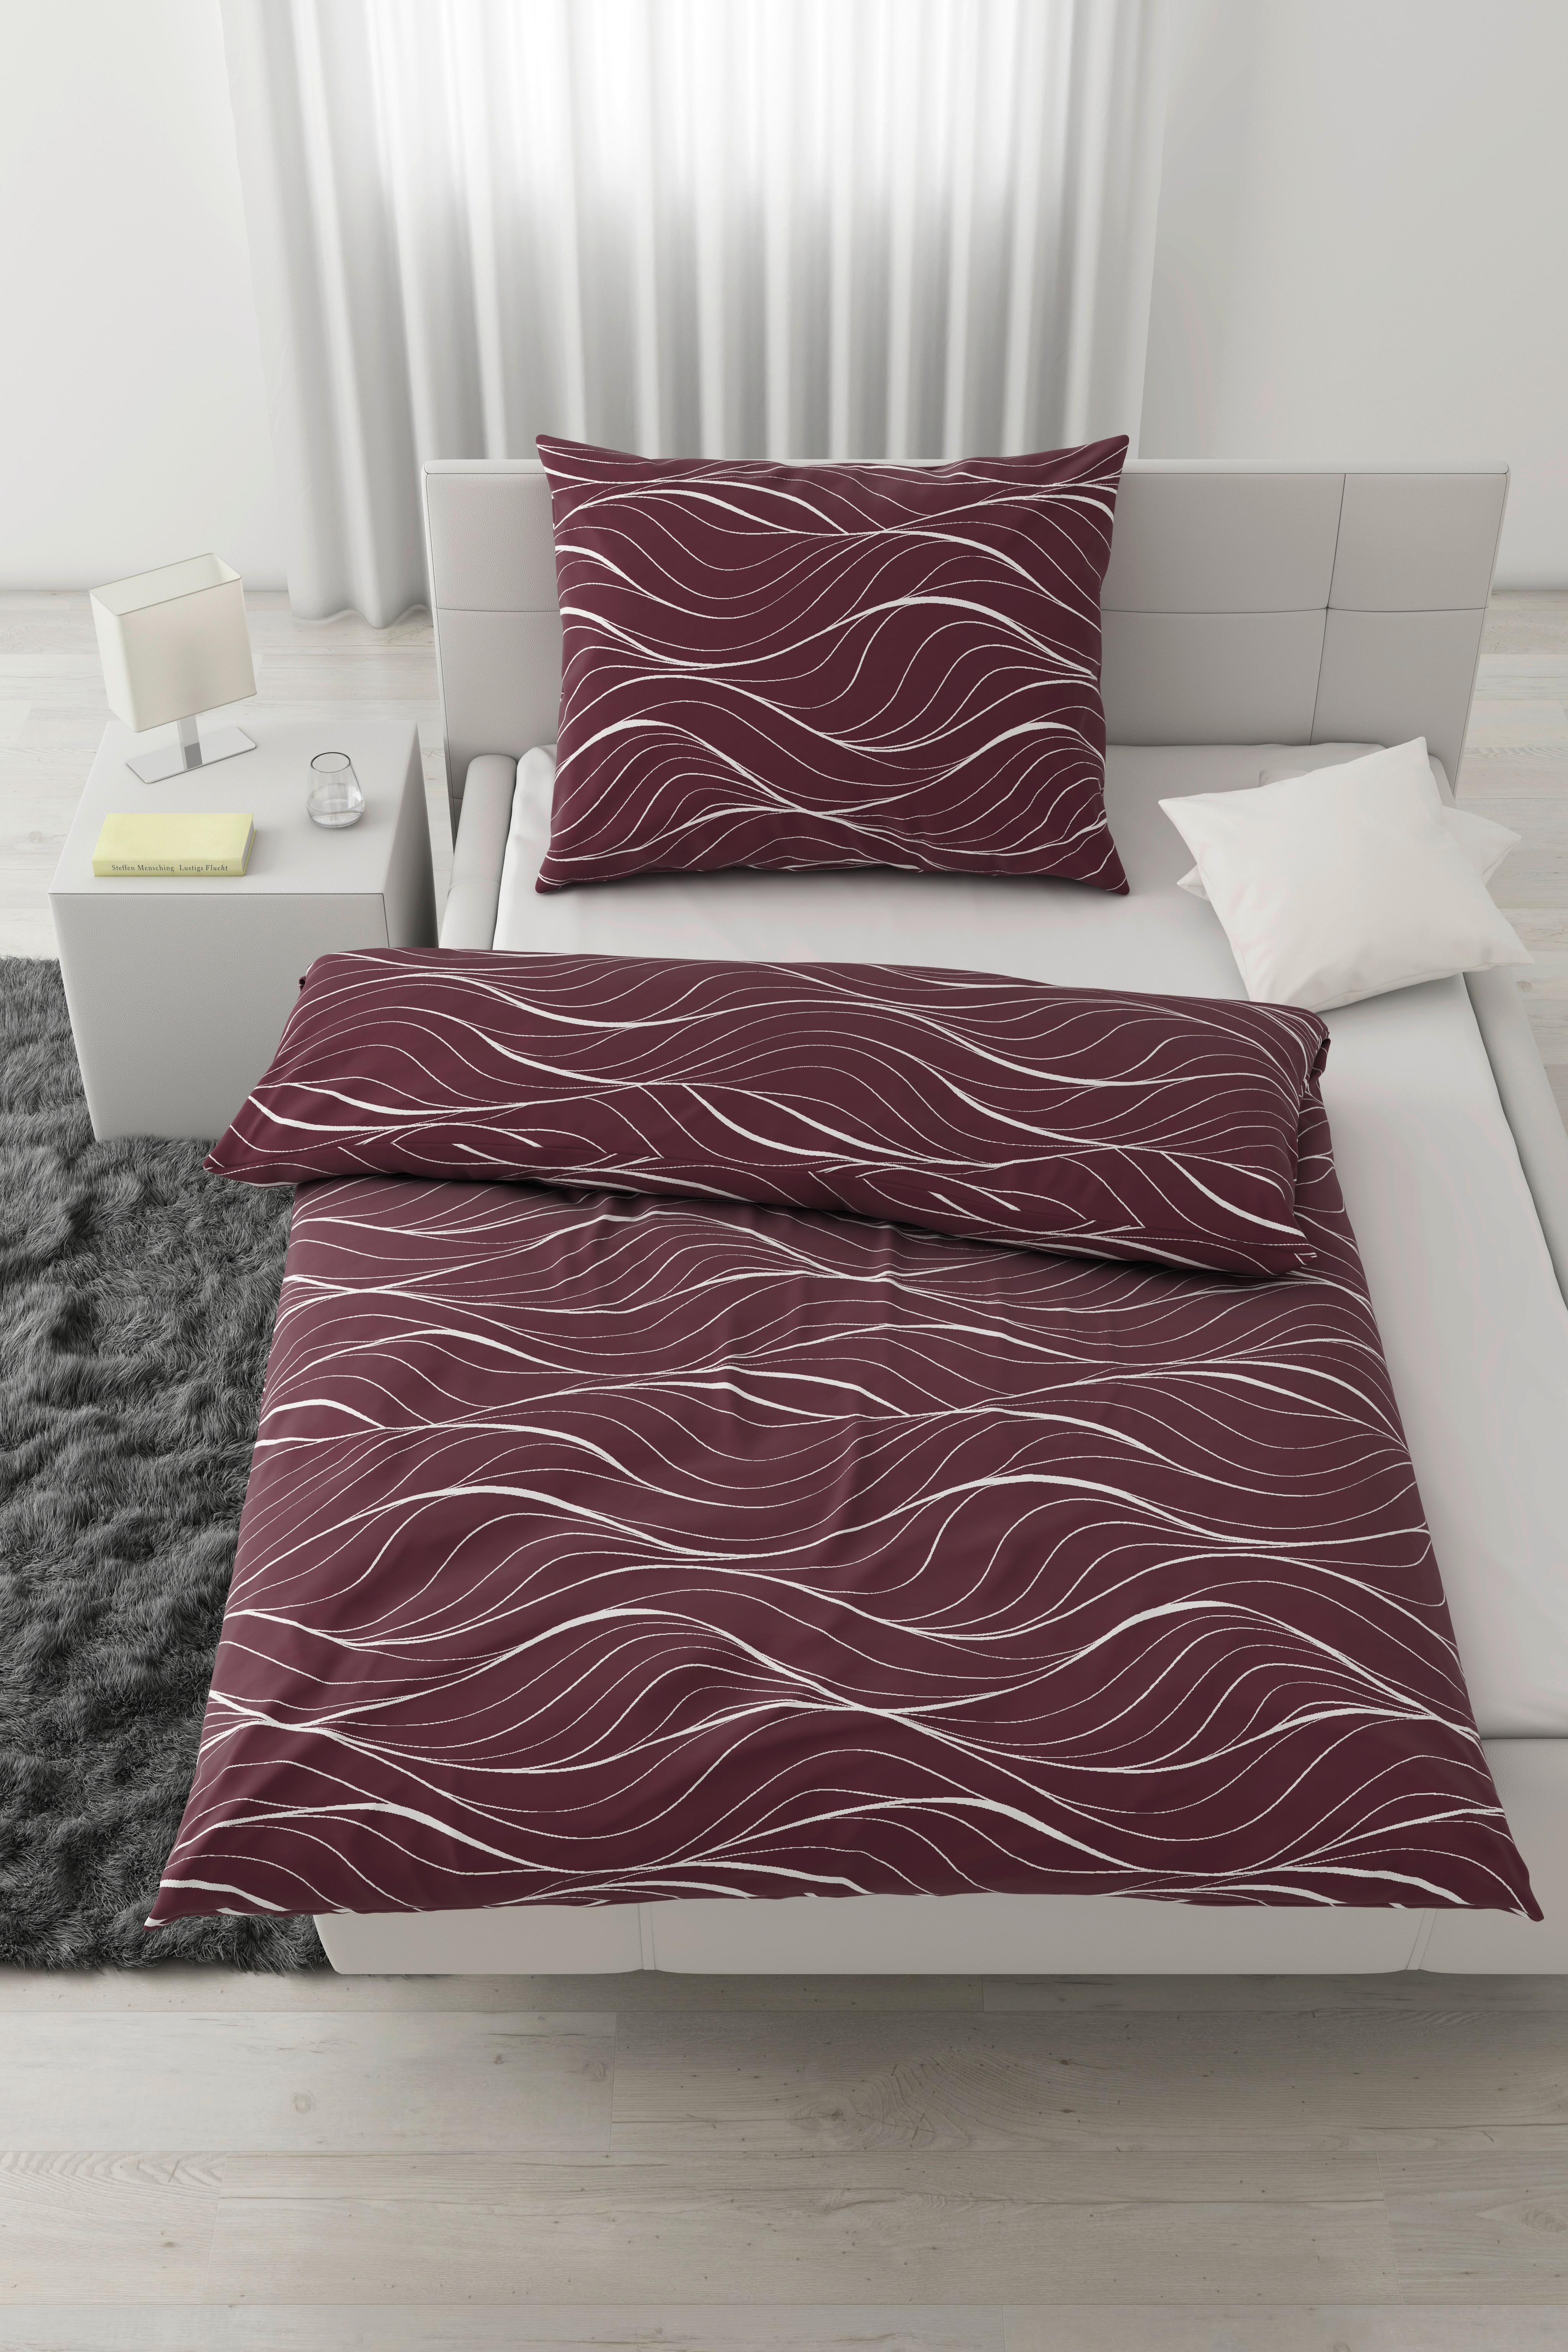 Posteľná Bielizeň Waves, 70/90 140/200cm - bobuľová, textil (140/200cm) - Modern Living